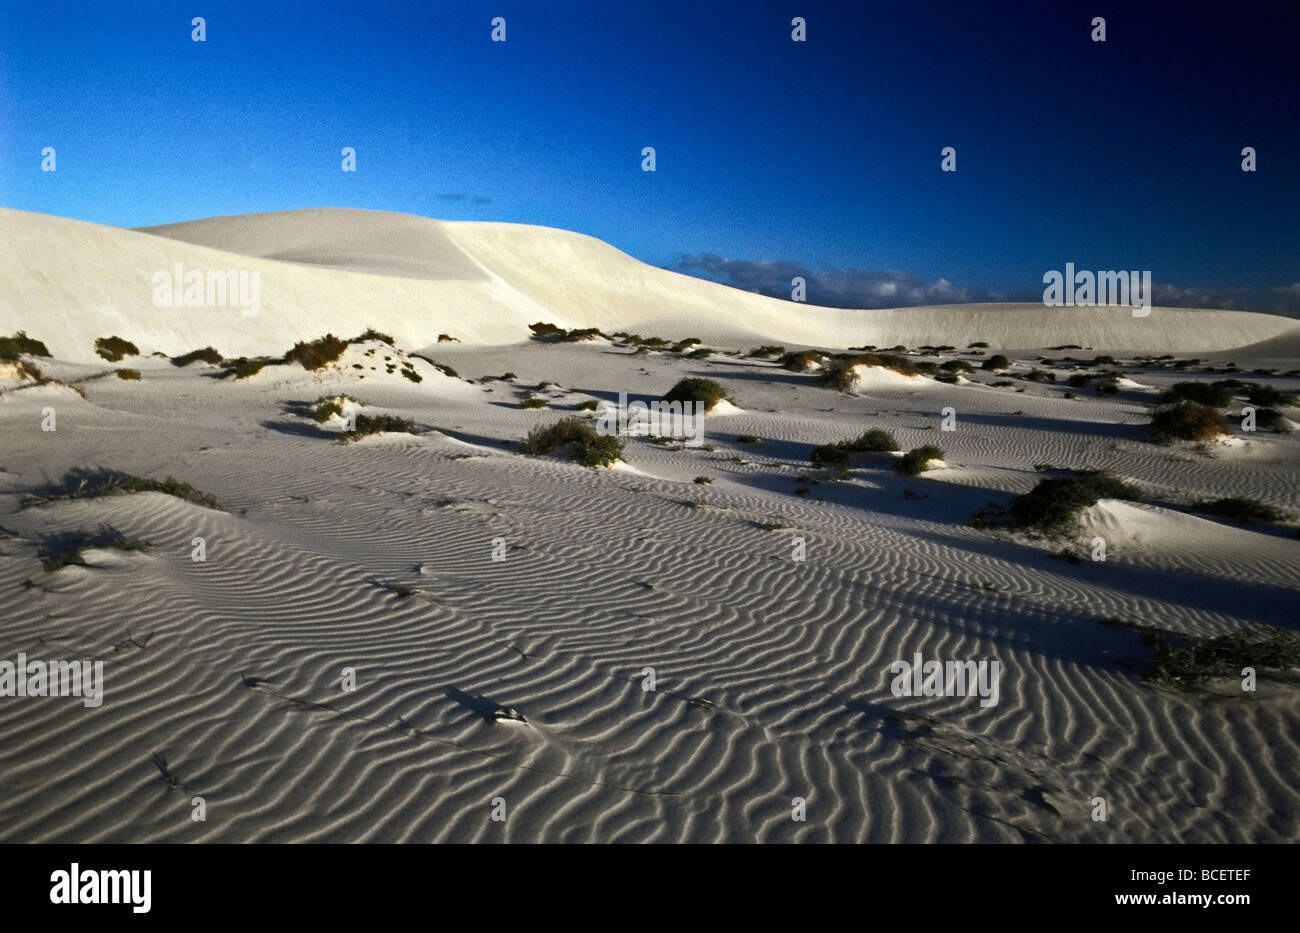 Saltbush, Atriplex species, growing in the lee of two sand dunes. Stock Photo